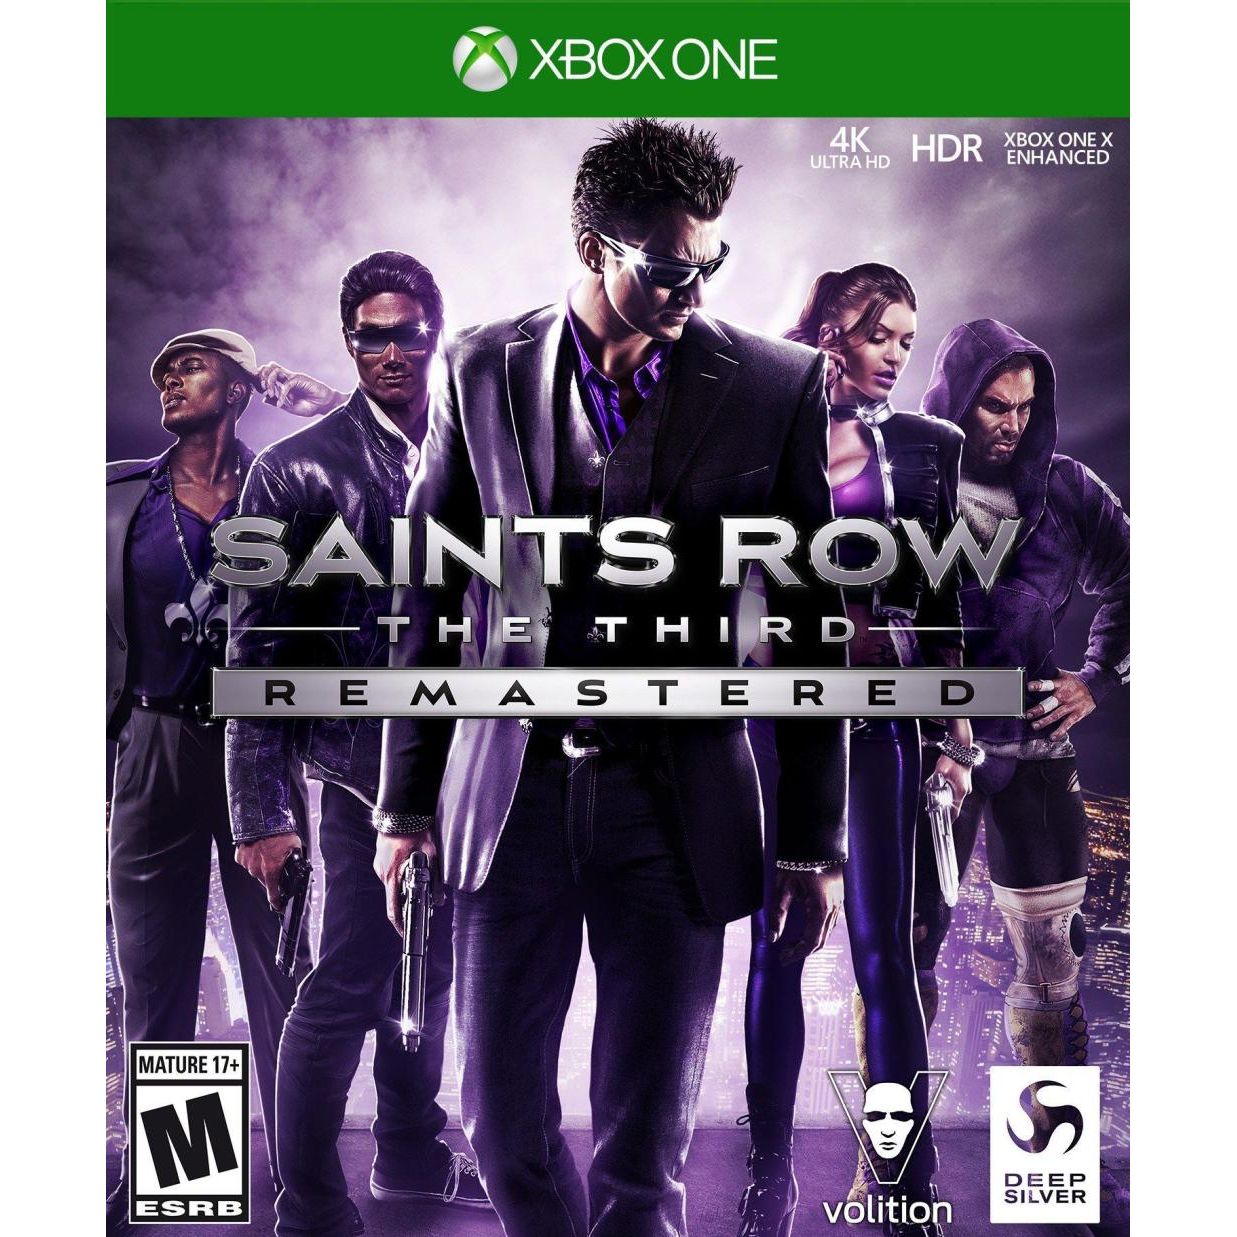 XBOX ONE - Saints Row The Third Remastered